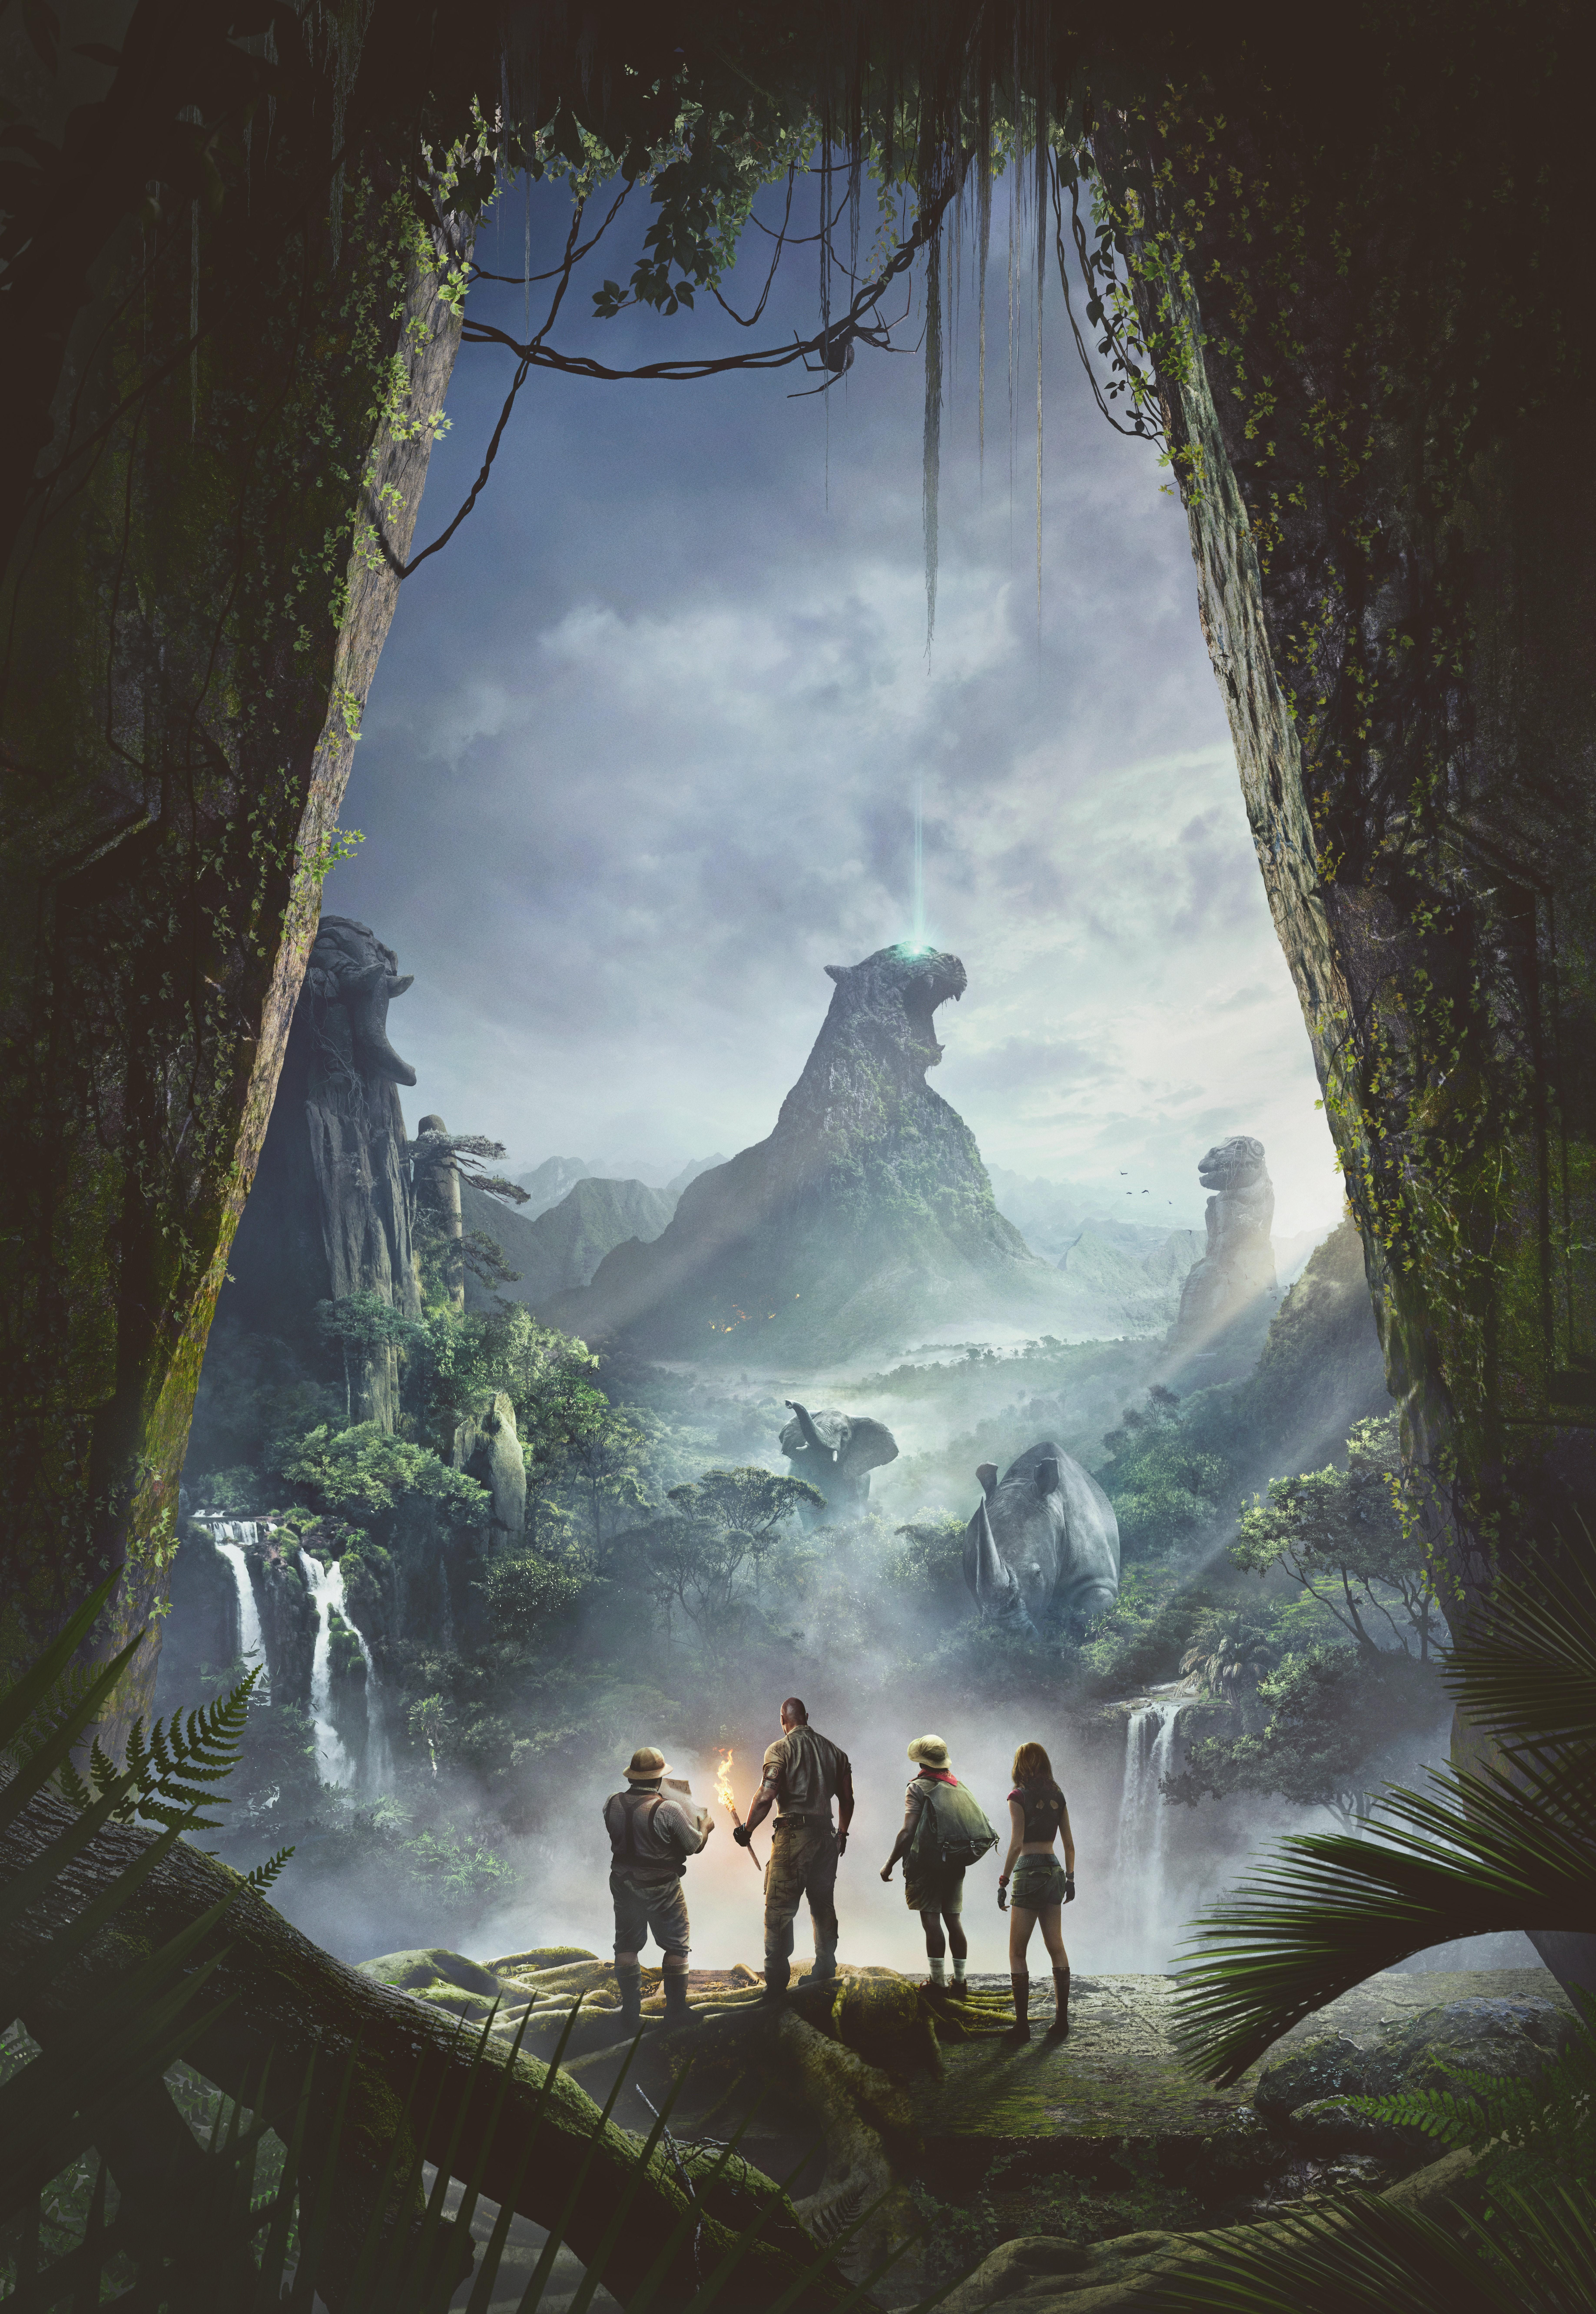 HD wallpaper, Karen Gillan, 5K, 4K, Jack Black, 7K, Kevin Hart, Fantastic World, Dwayne Johnson, Jumanji  Welcome To The Jungle, 6K